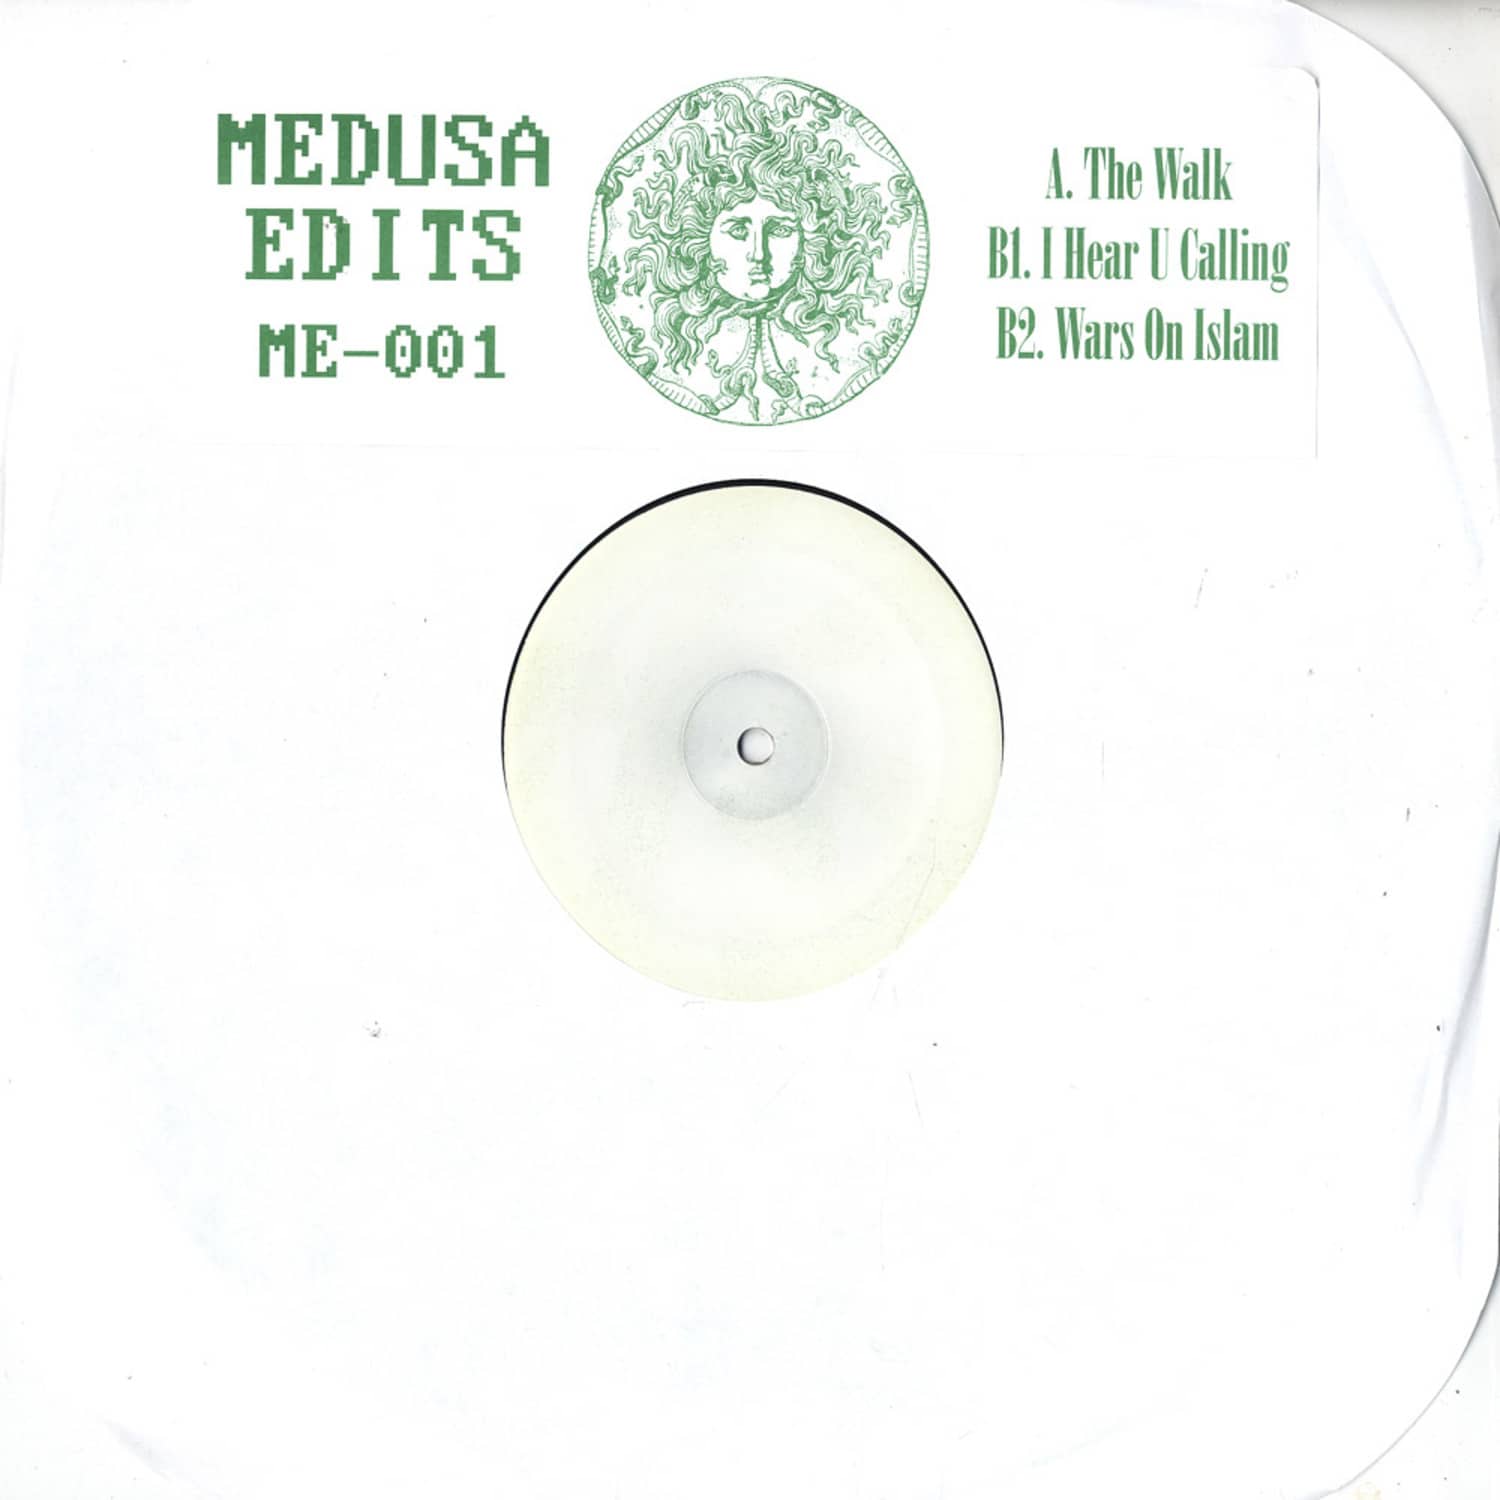 Medusa Edits - REFLECTION SERIES VOL 1